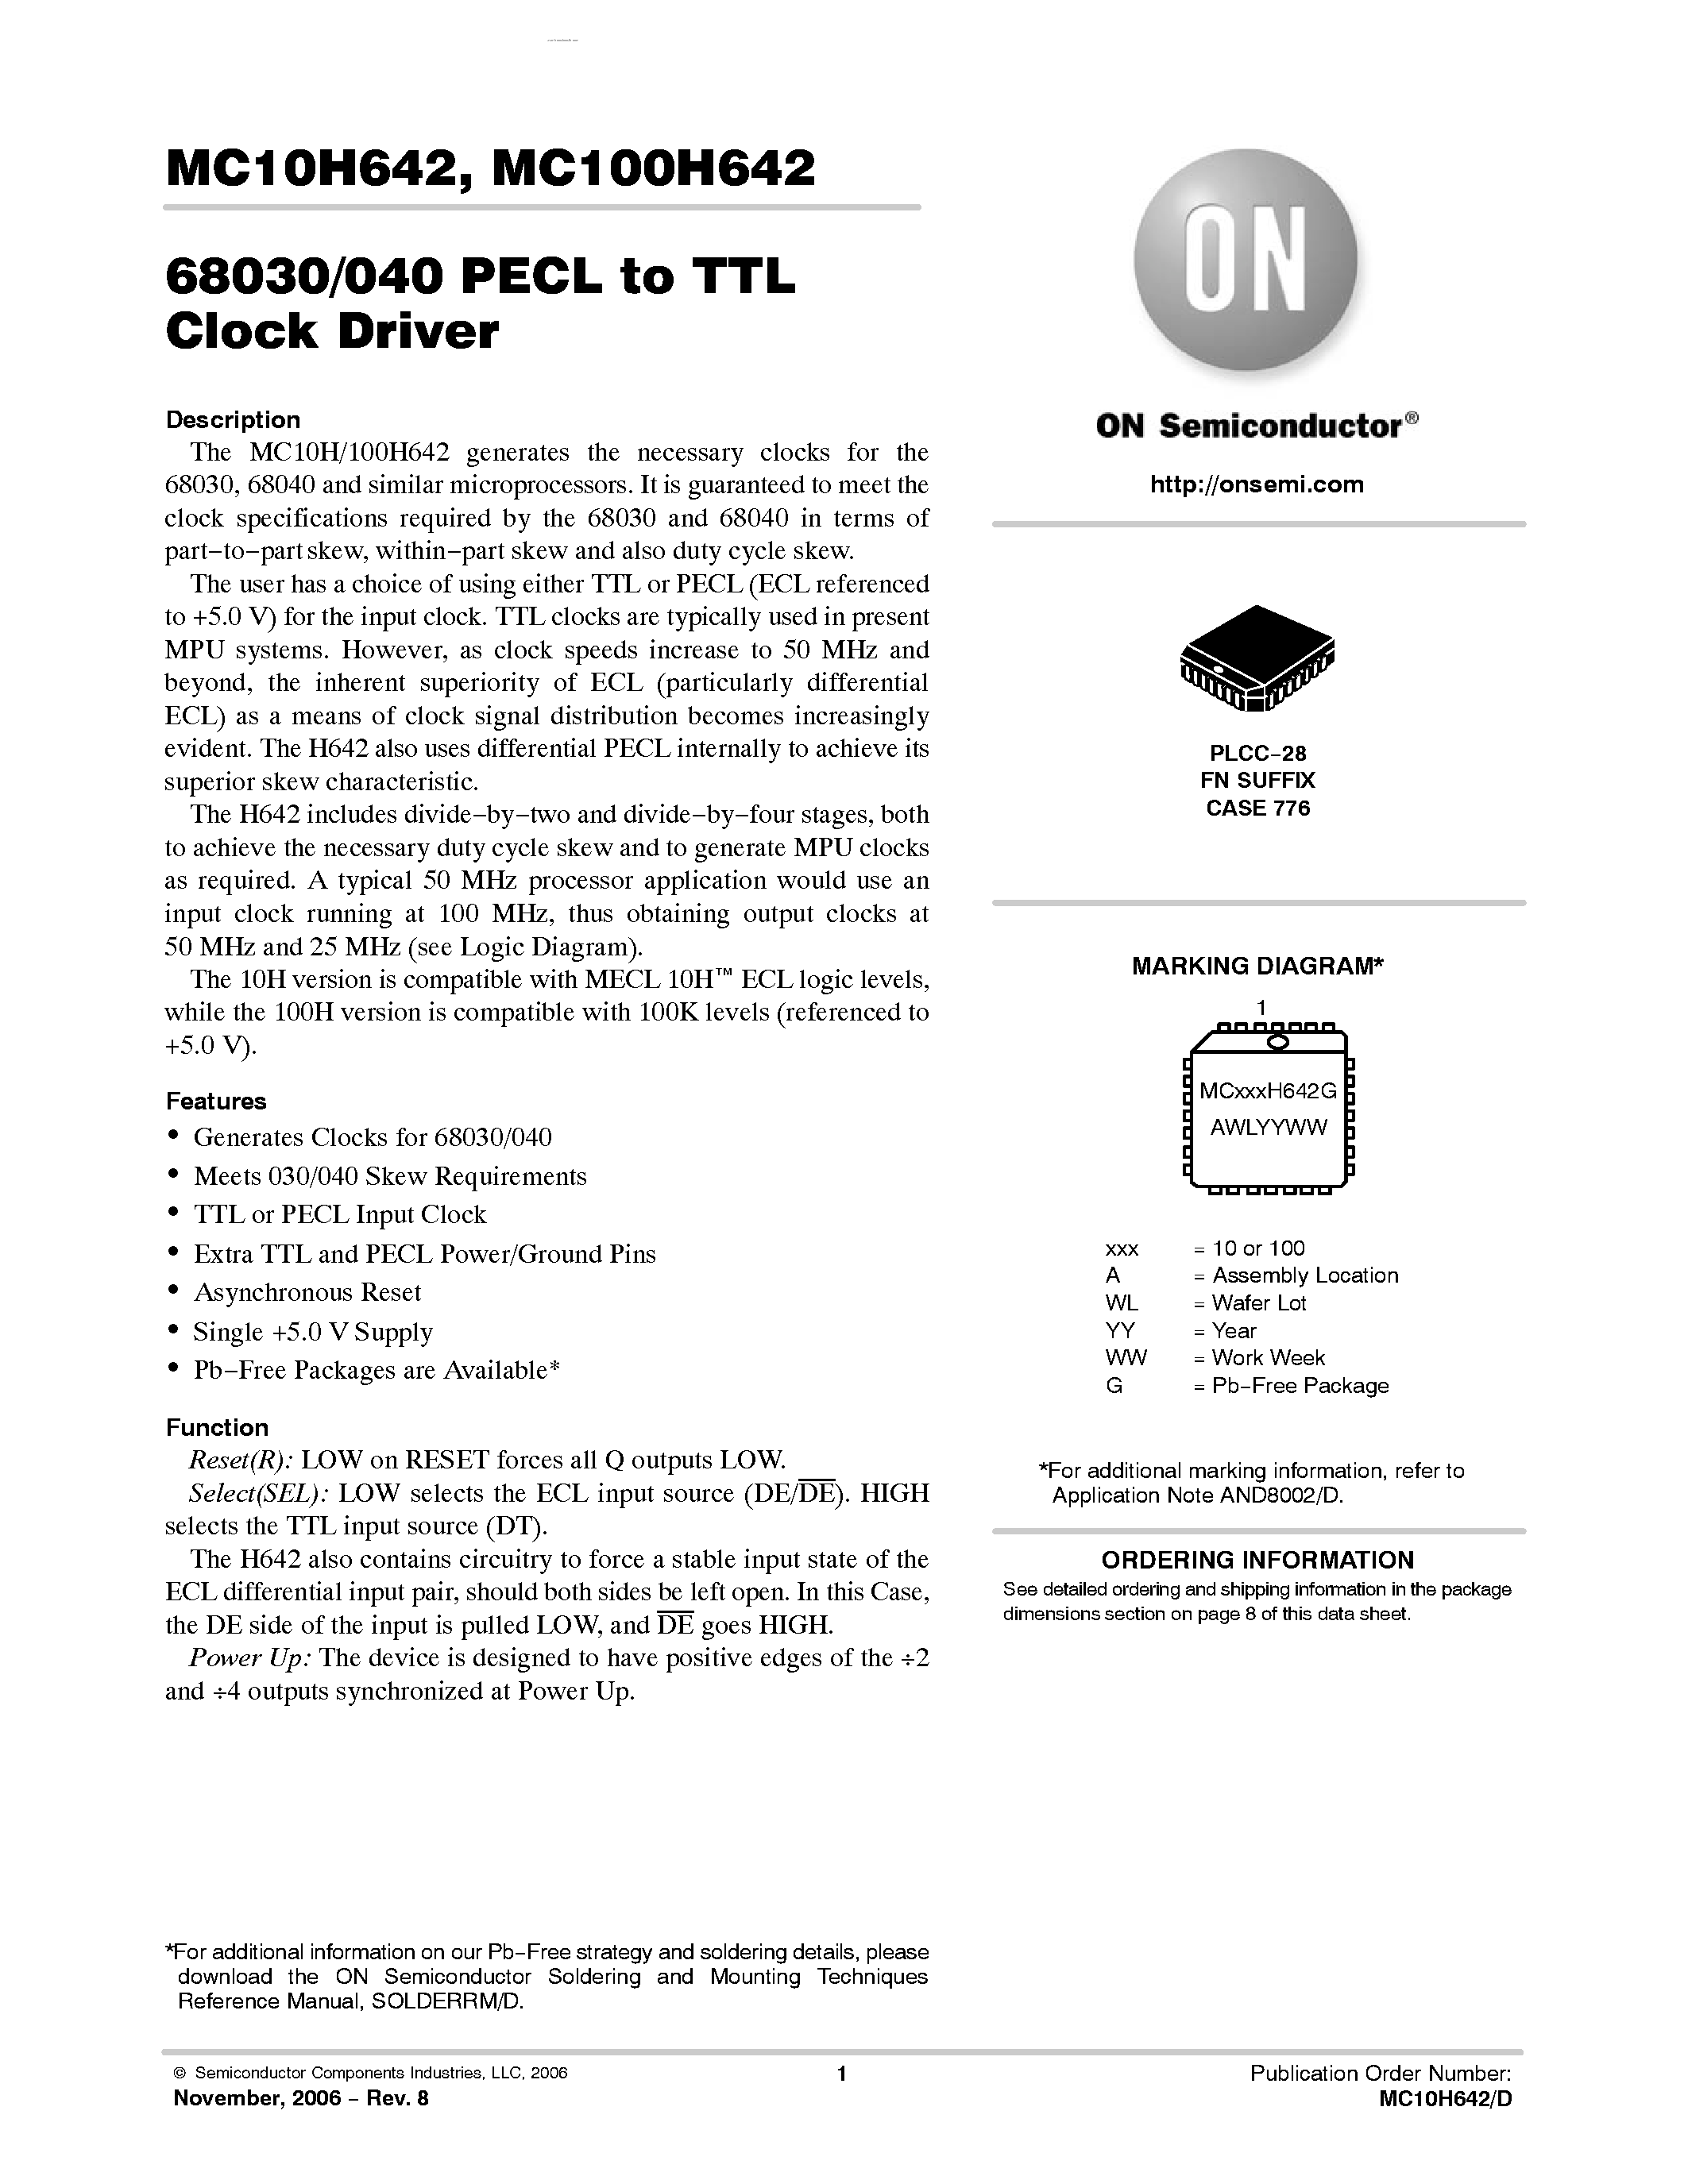 Даташит MC10H642 - 68030/040 PECL-TTL CLOCK DRIVER страница 1